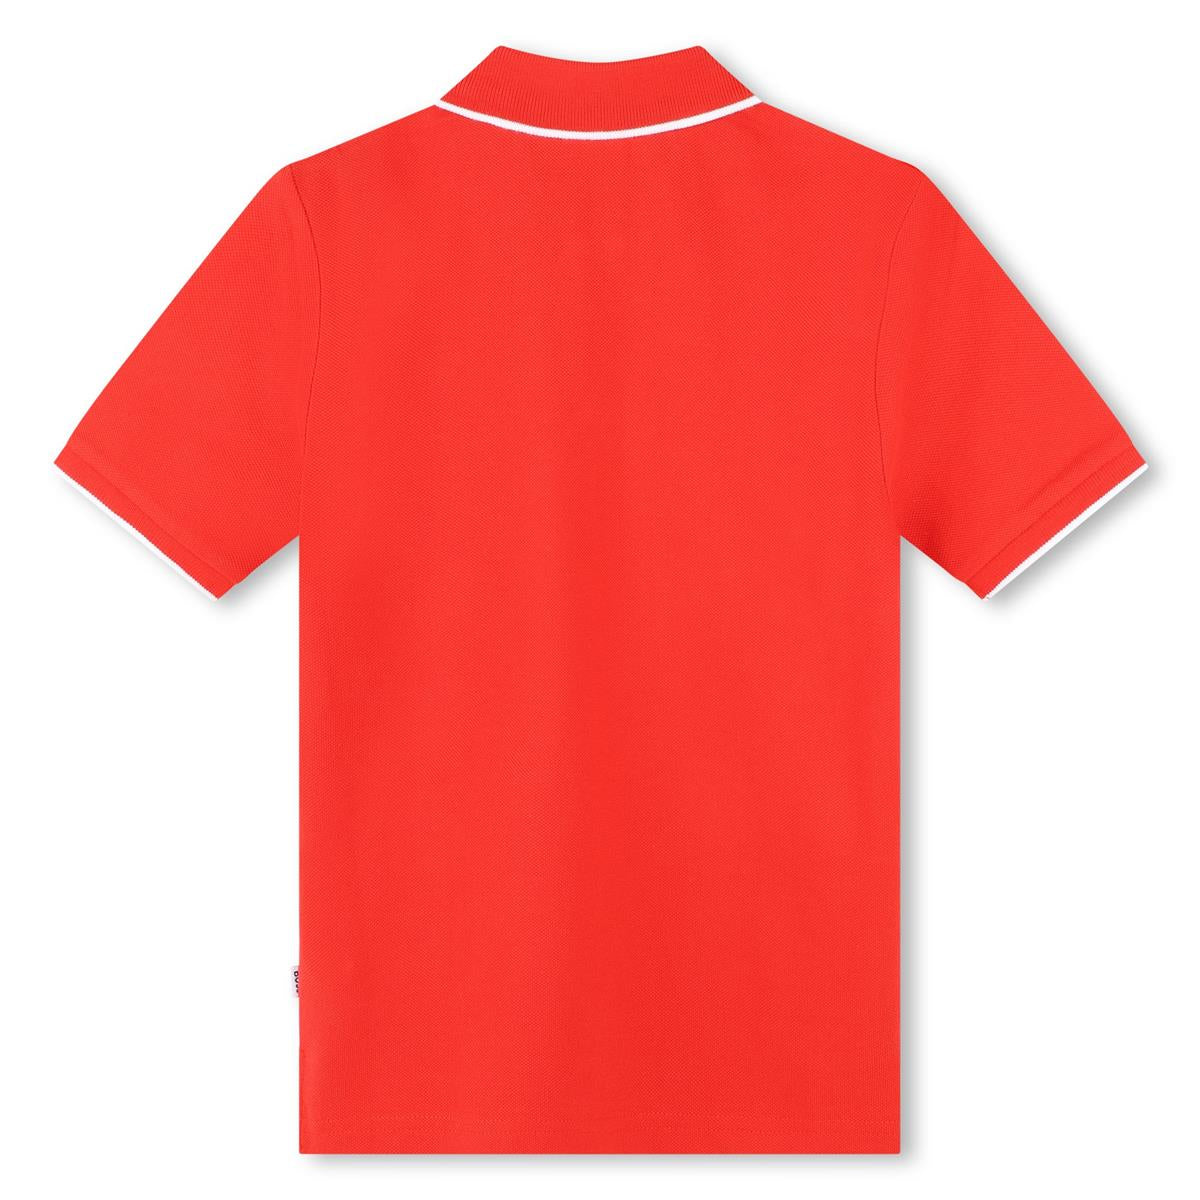 Boys Orange Cotton Polo Shirt